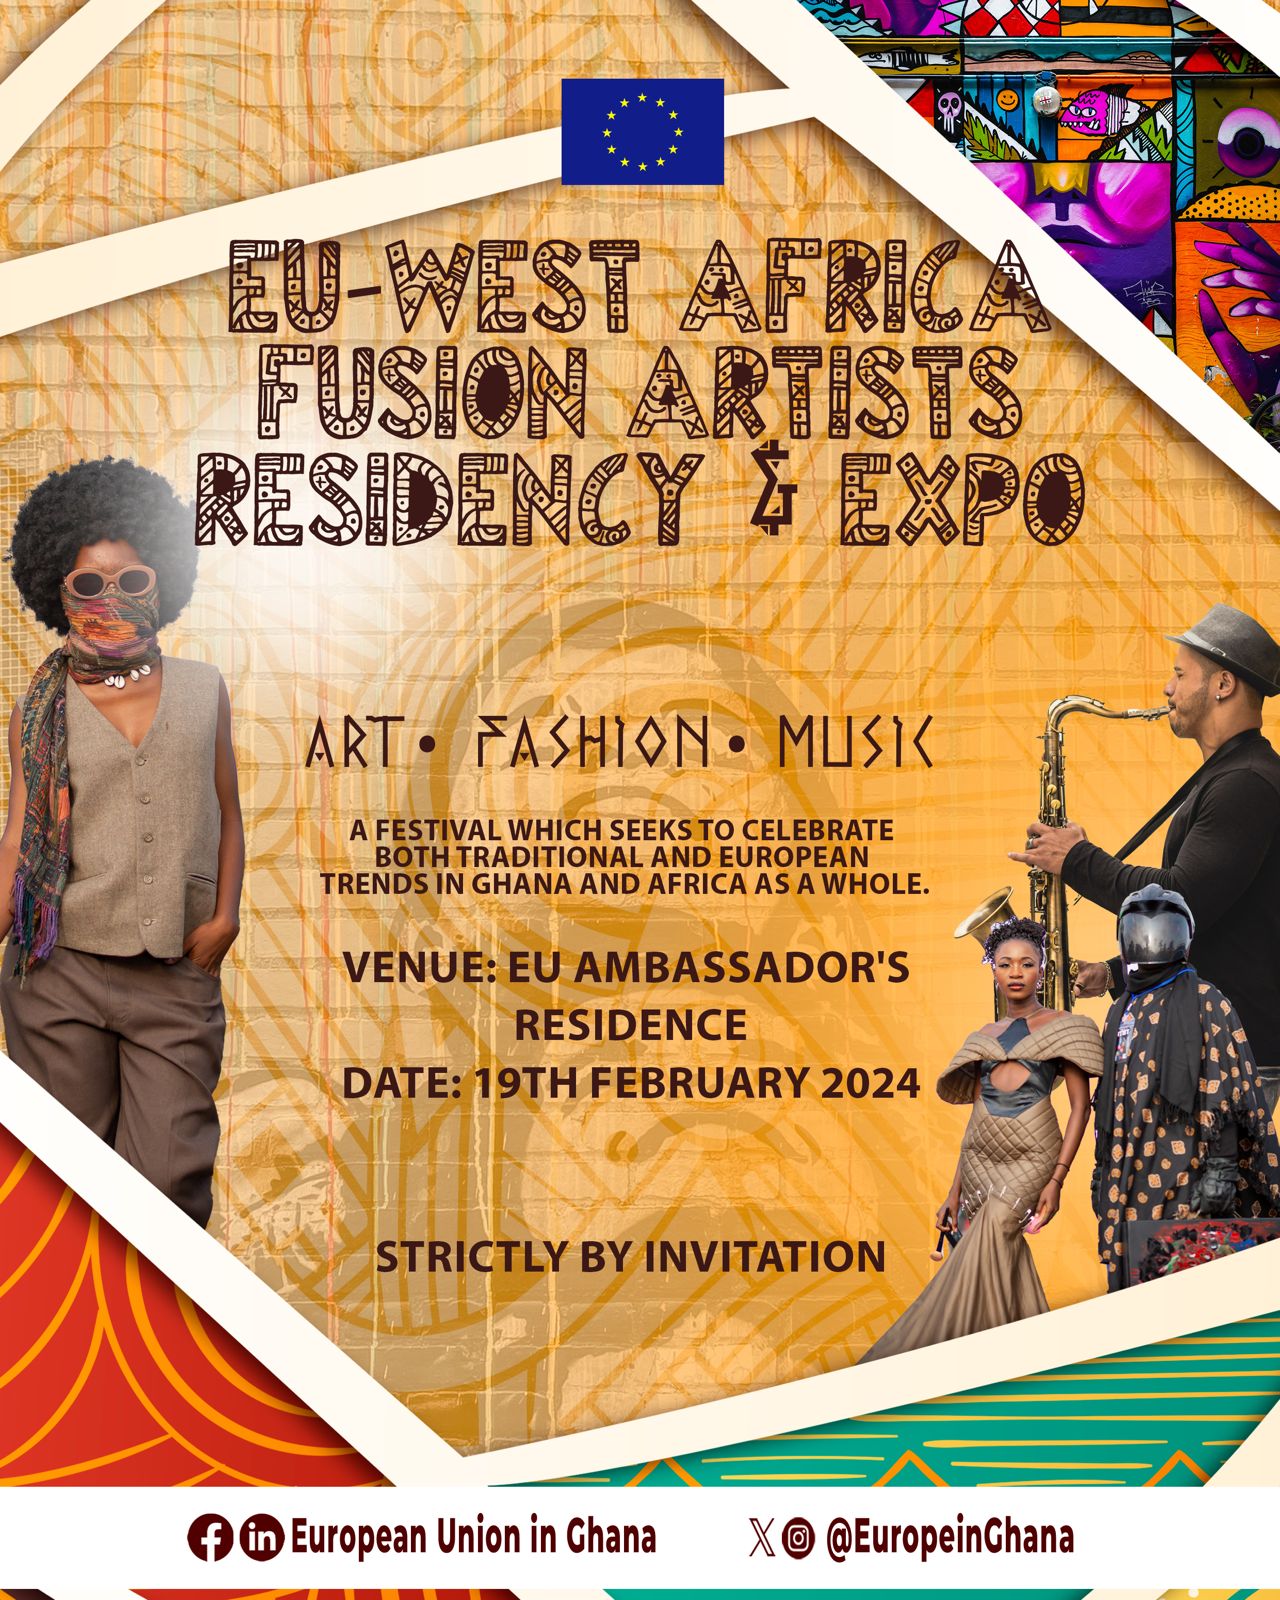 eu-west-africa-arts-festival-opens-in-accra